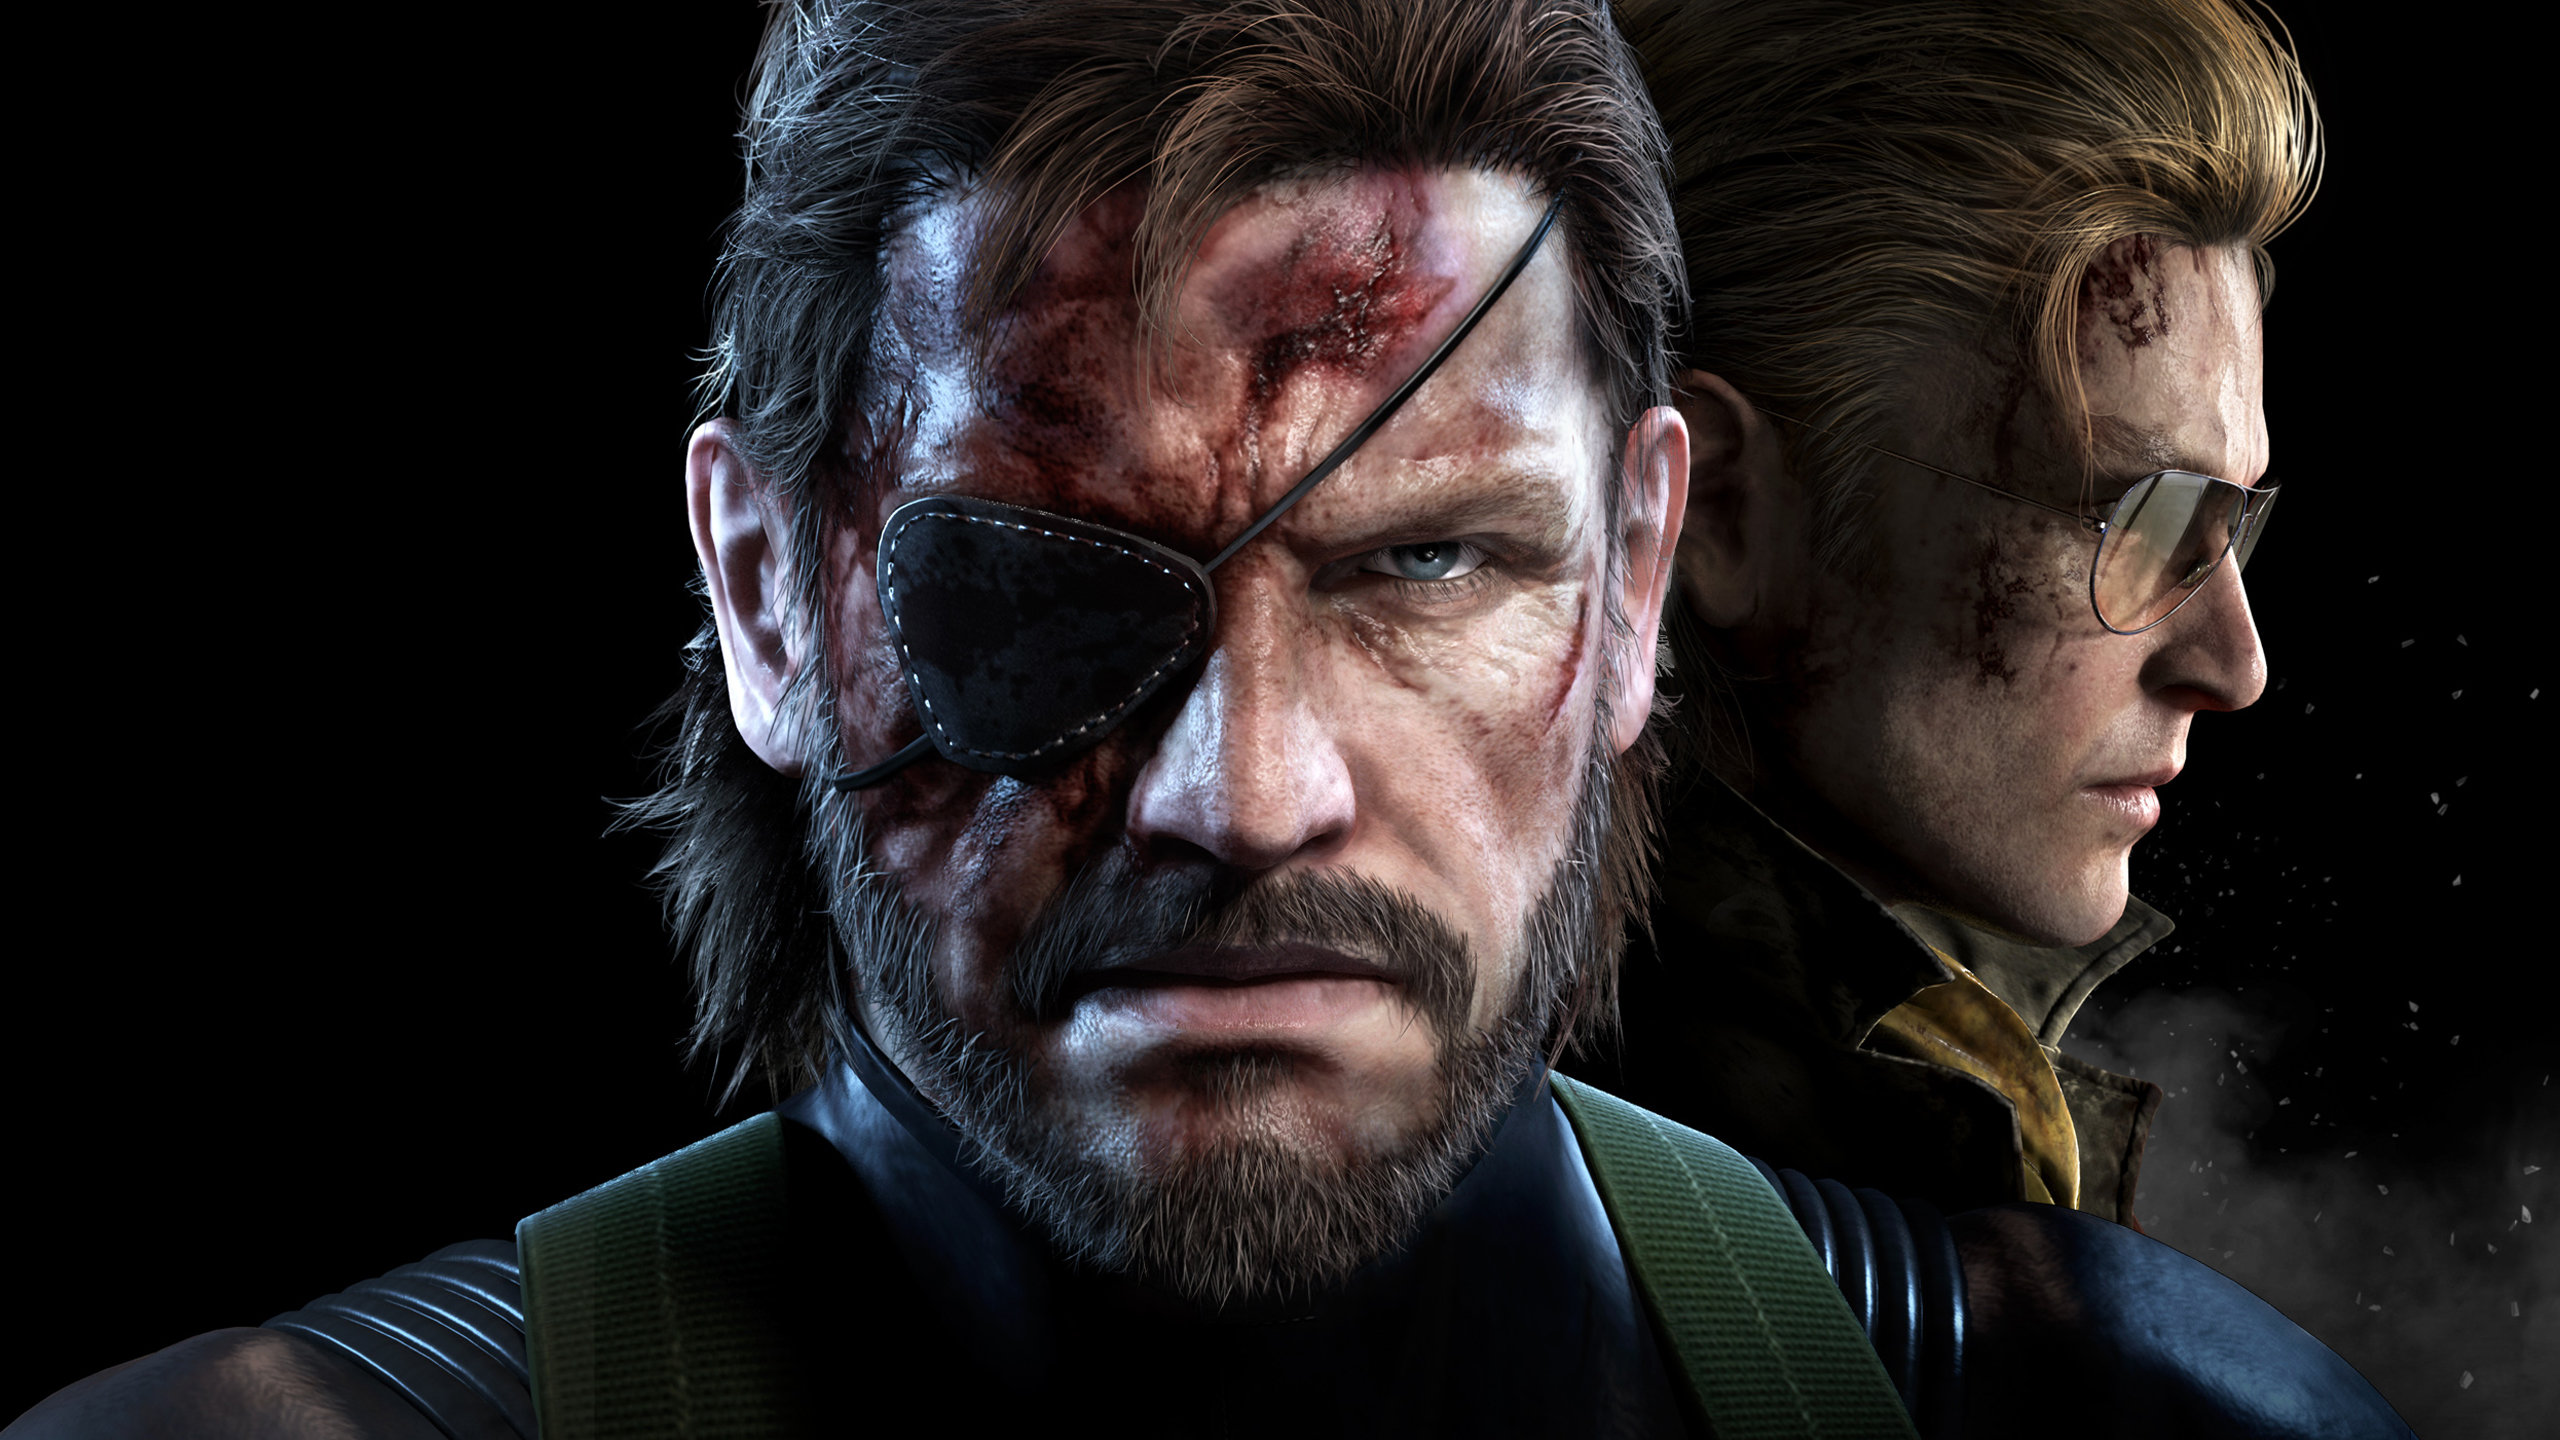 Download hd 2560x1440 Metal Gear Solid 5 (V): The Phantom Pain (MGSV 5) PC wallpaper ID:460415 for free